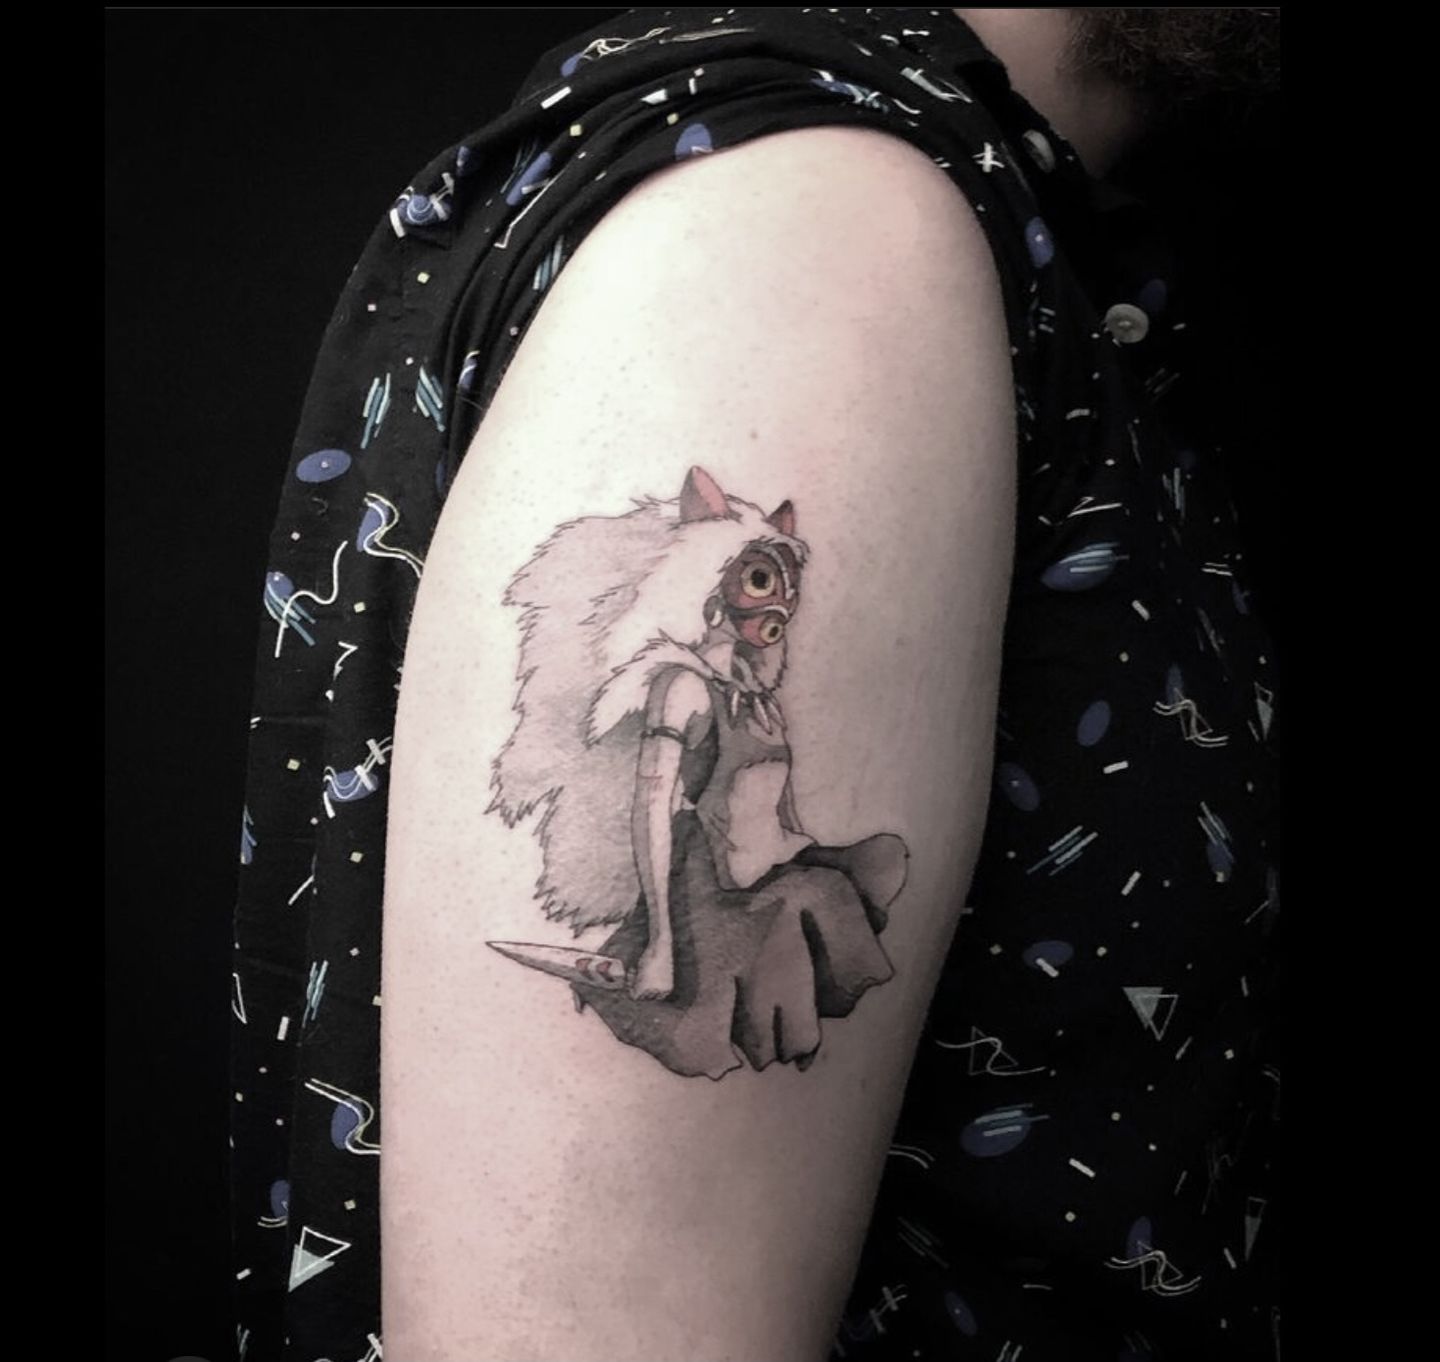 Tattoo tagged with film and book ghibli big deboracherrys princess  mononoke facebook twitter portrait neotraditional upper arm   inkedappcom